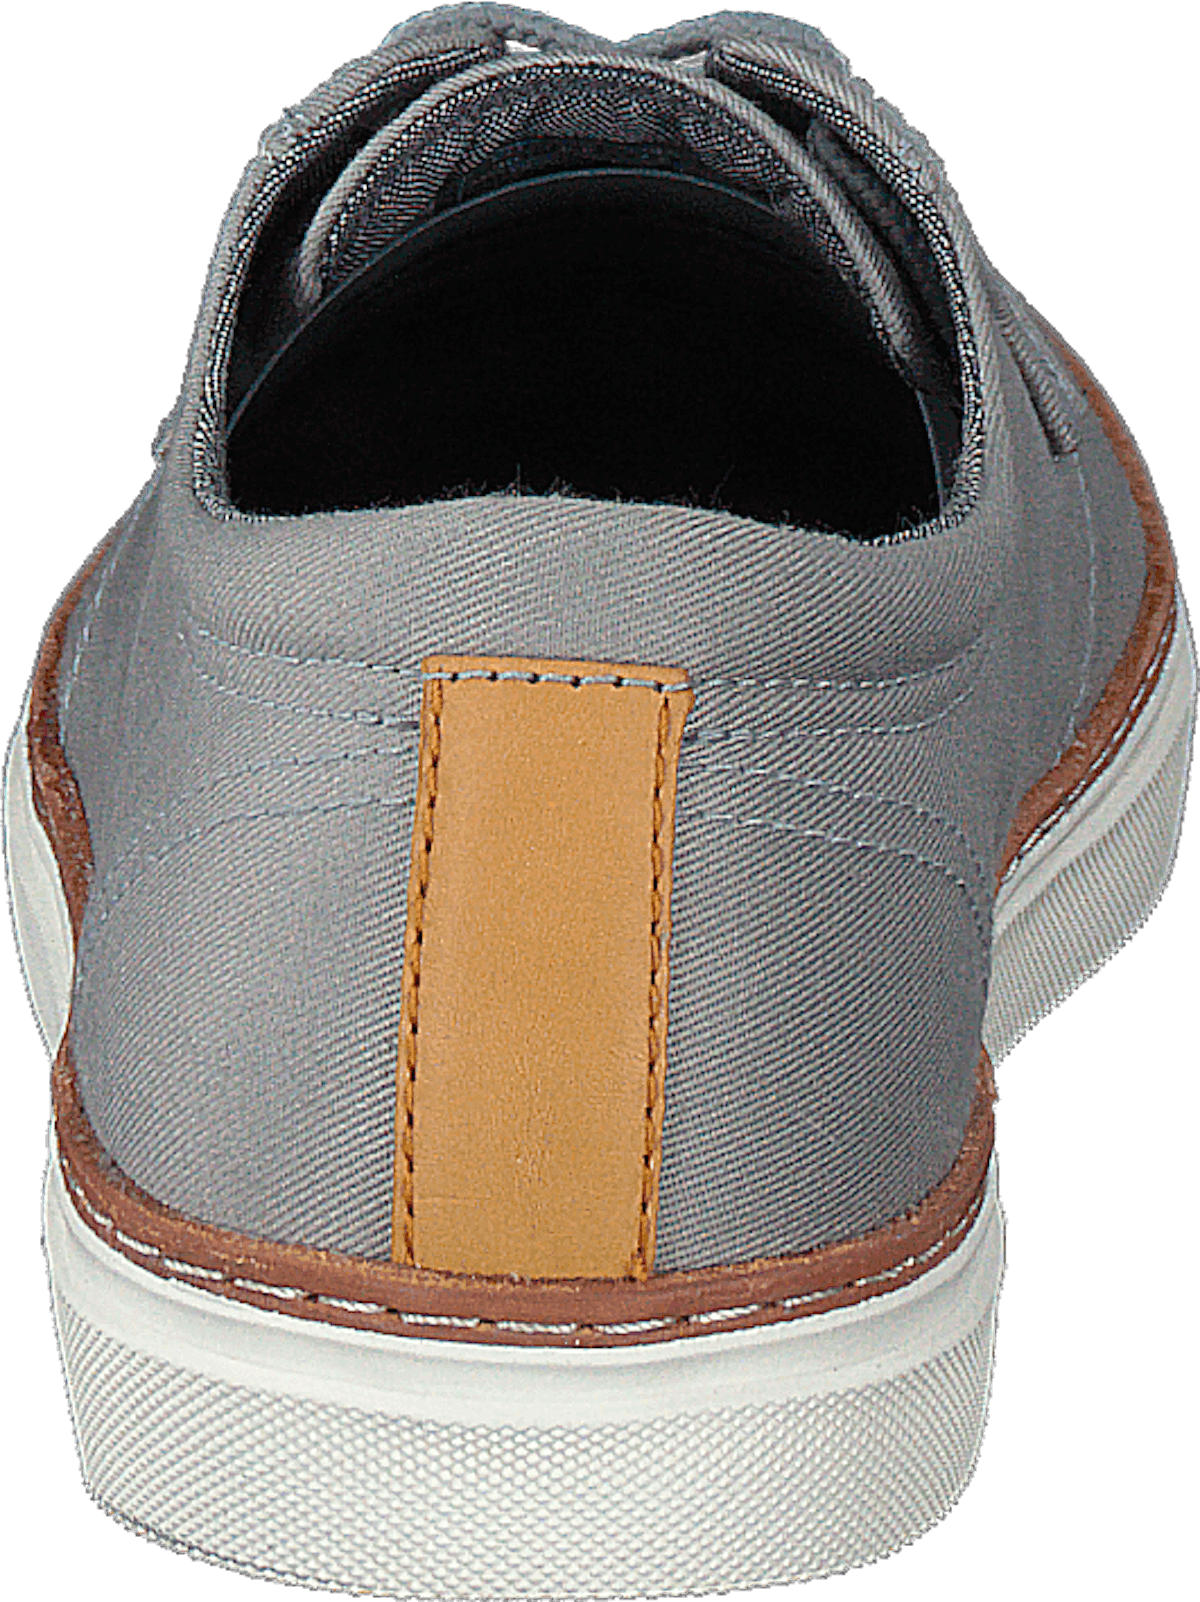 Prepville Sneaker G841 - Sleet Gray